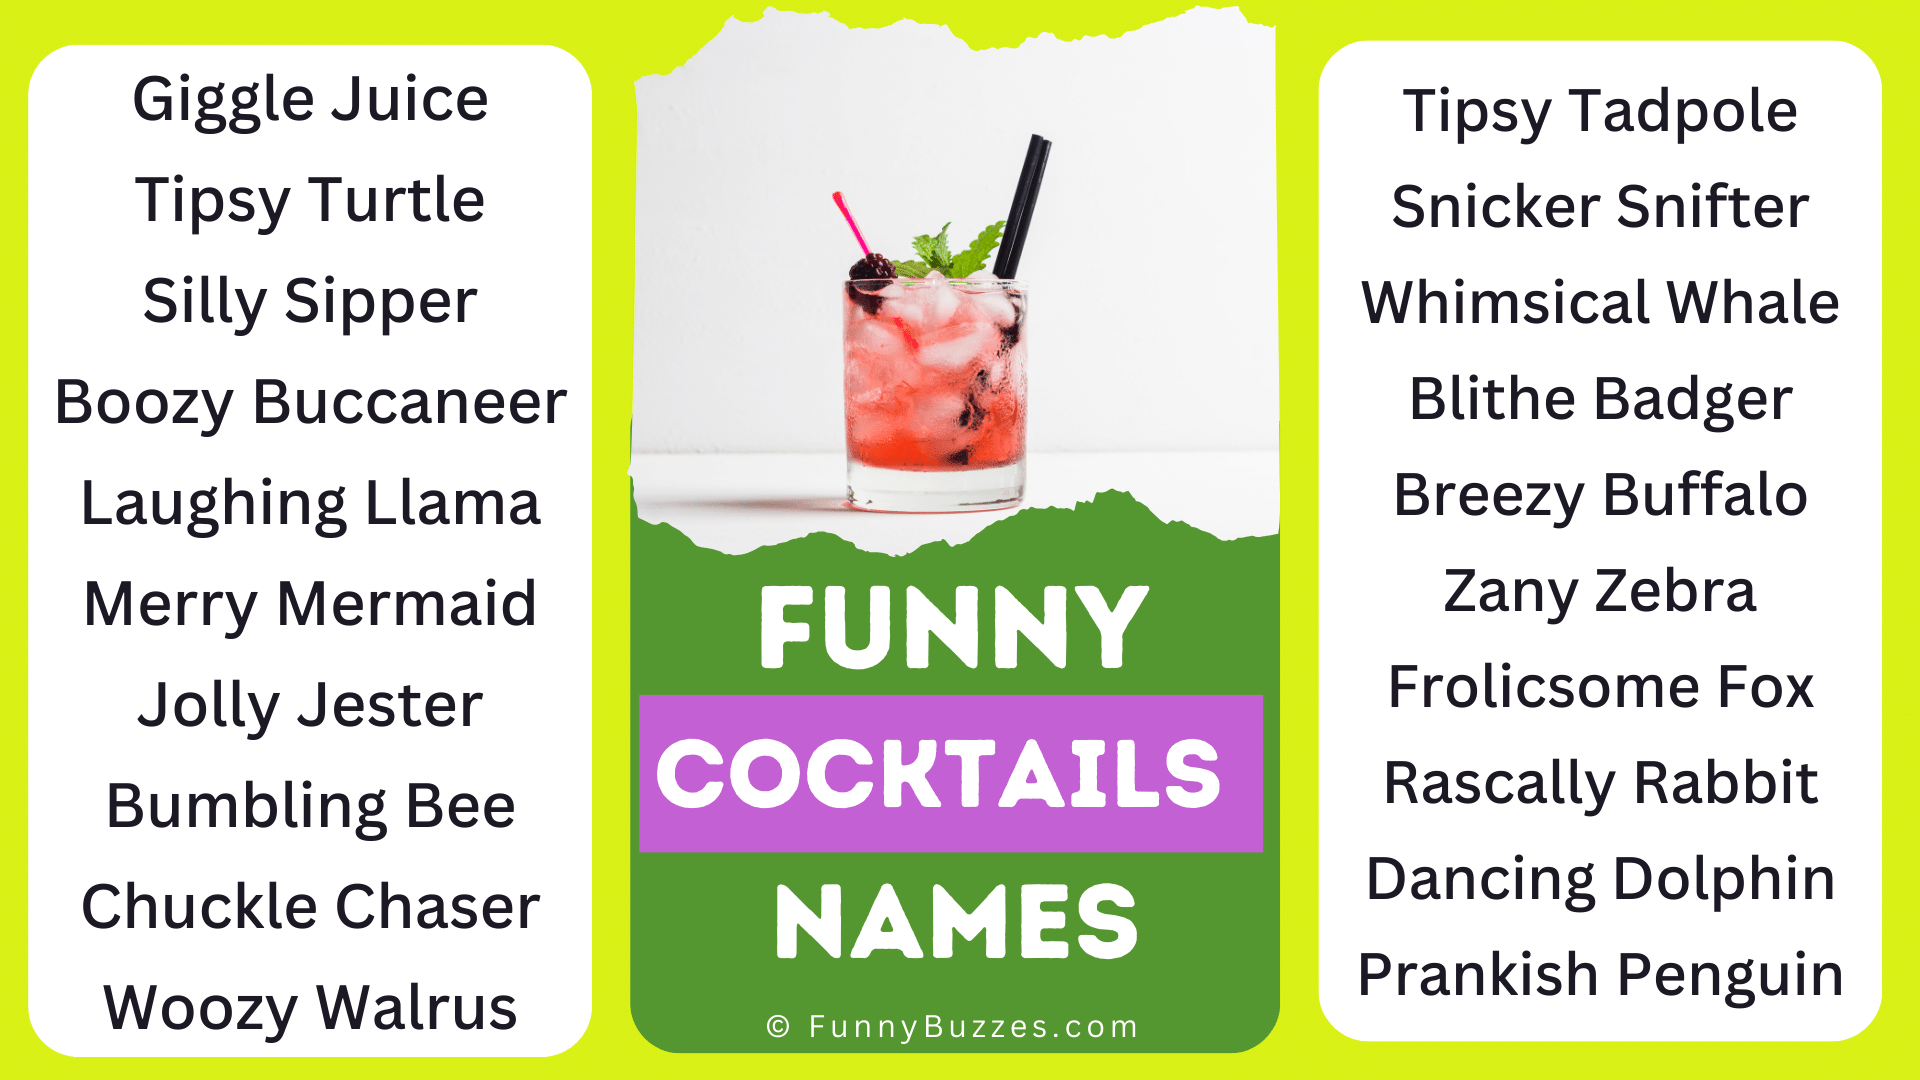 Funny Cocktails Names